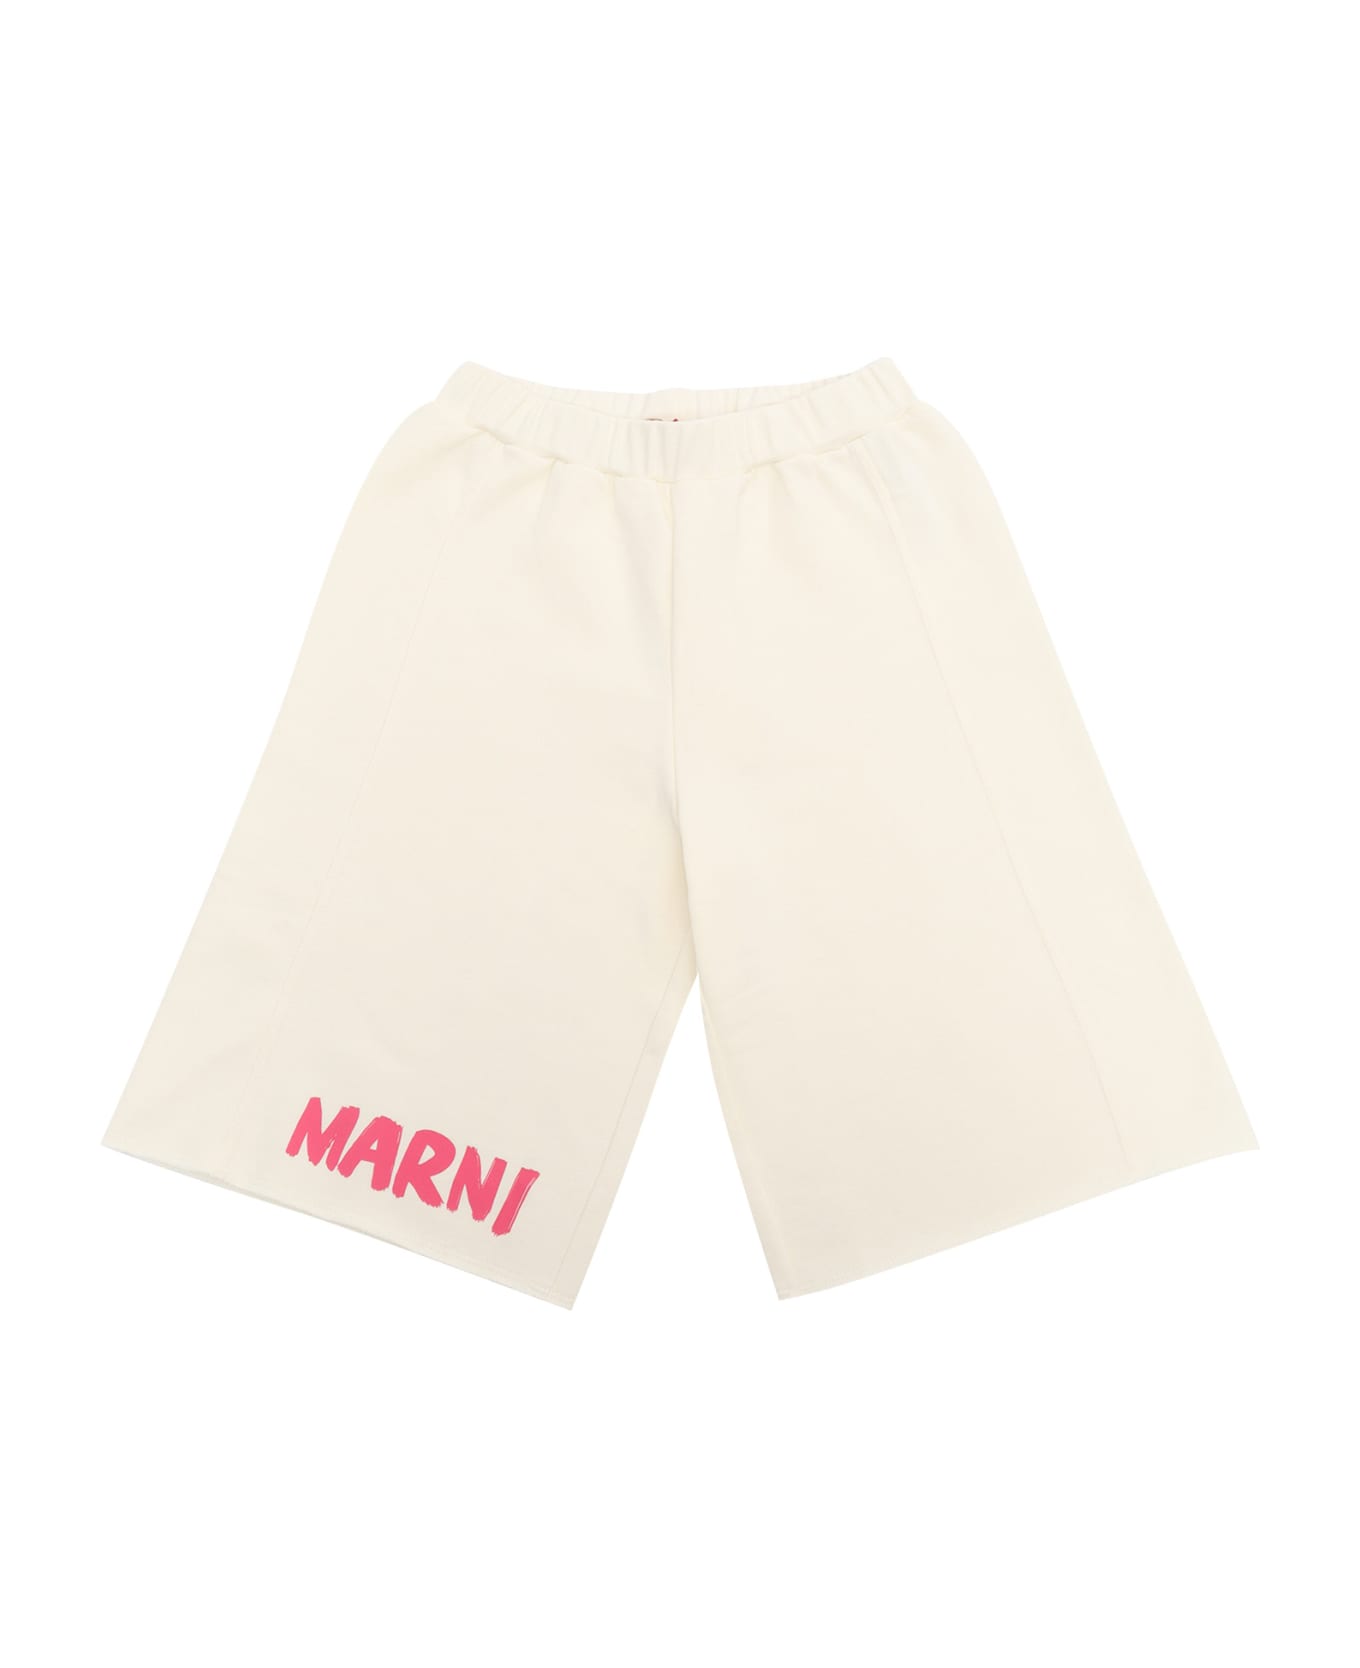 Marni Bermuda Shorts - MULTICOLOR